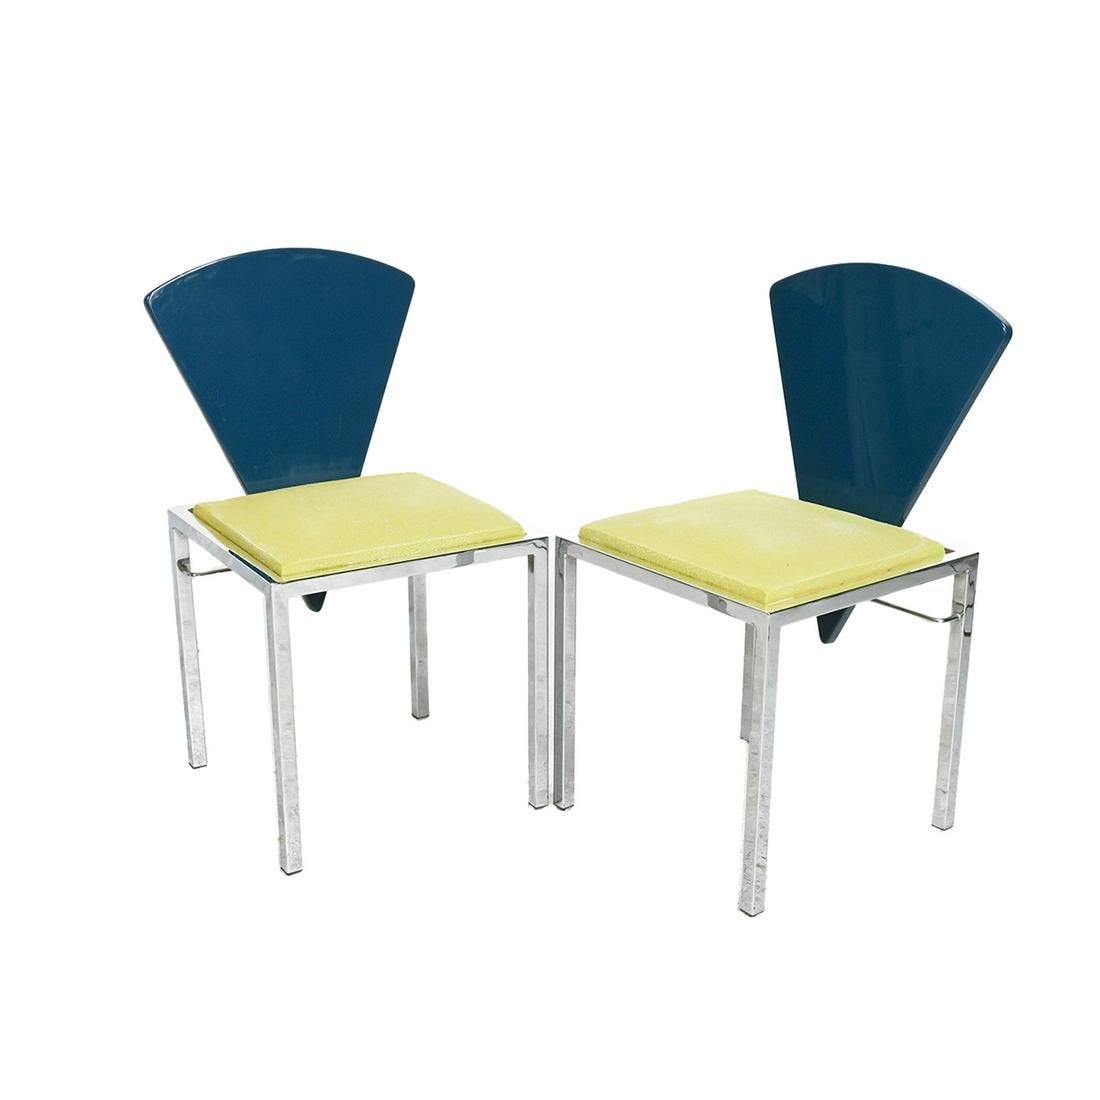 Six Saporiti Omaggi Style Chrome and Lucite Chairs